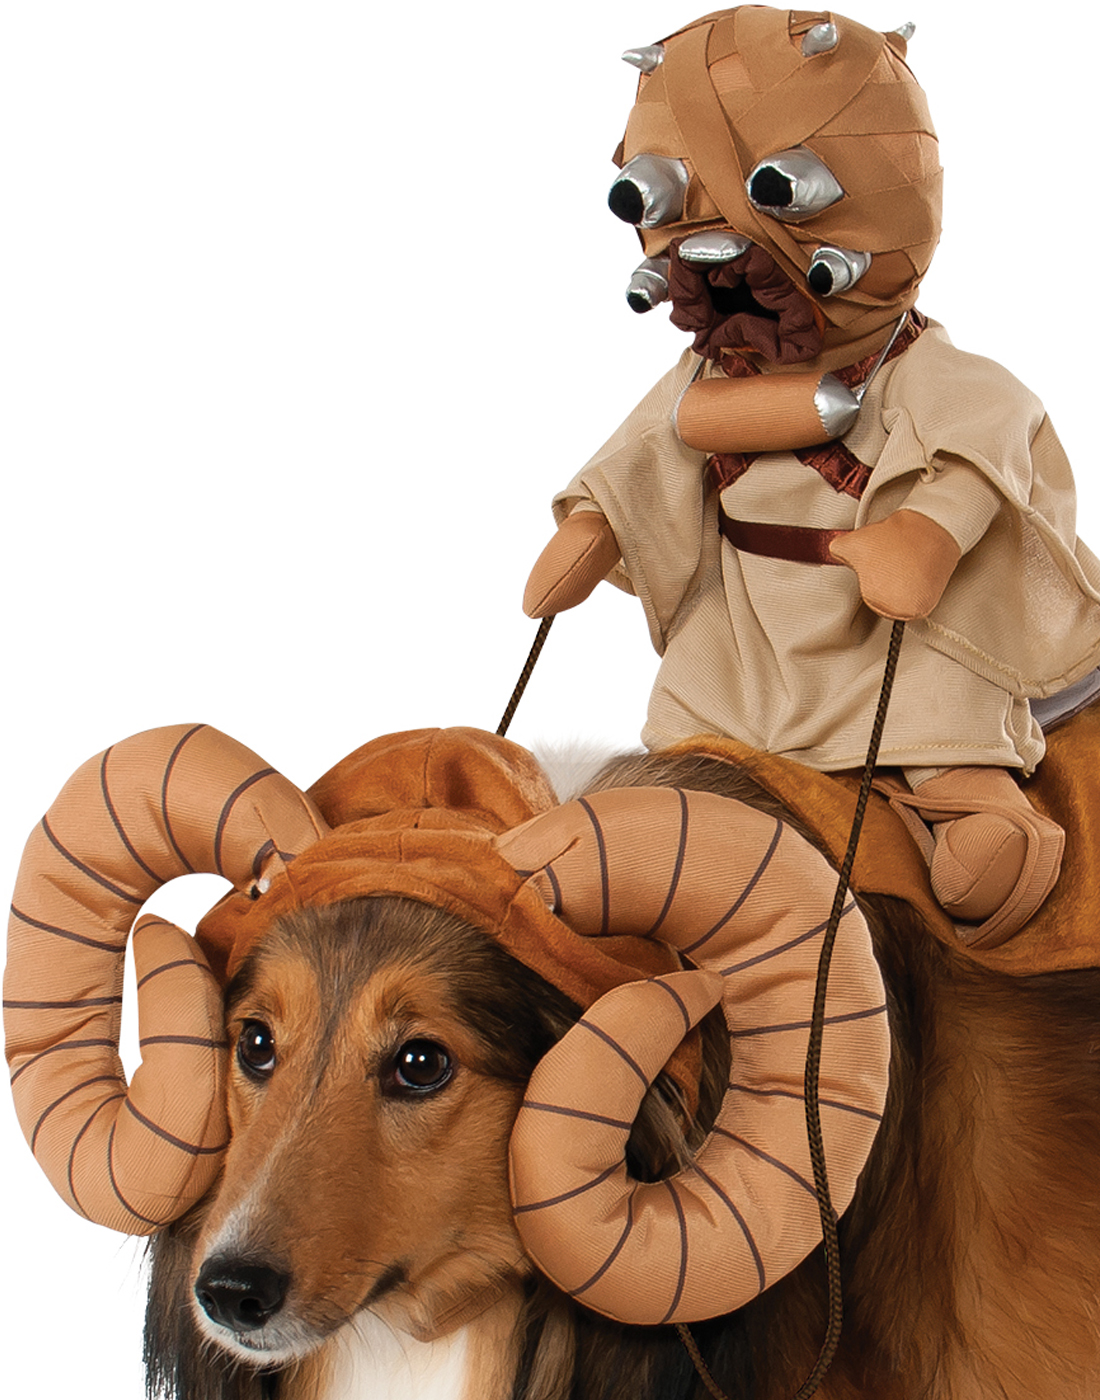 Bantha Pet Dog Costume Star Wars - image 2 of 2